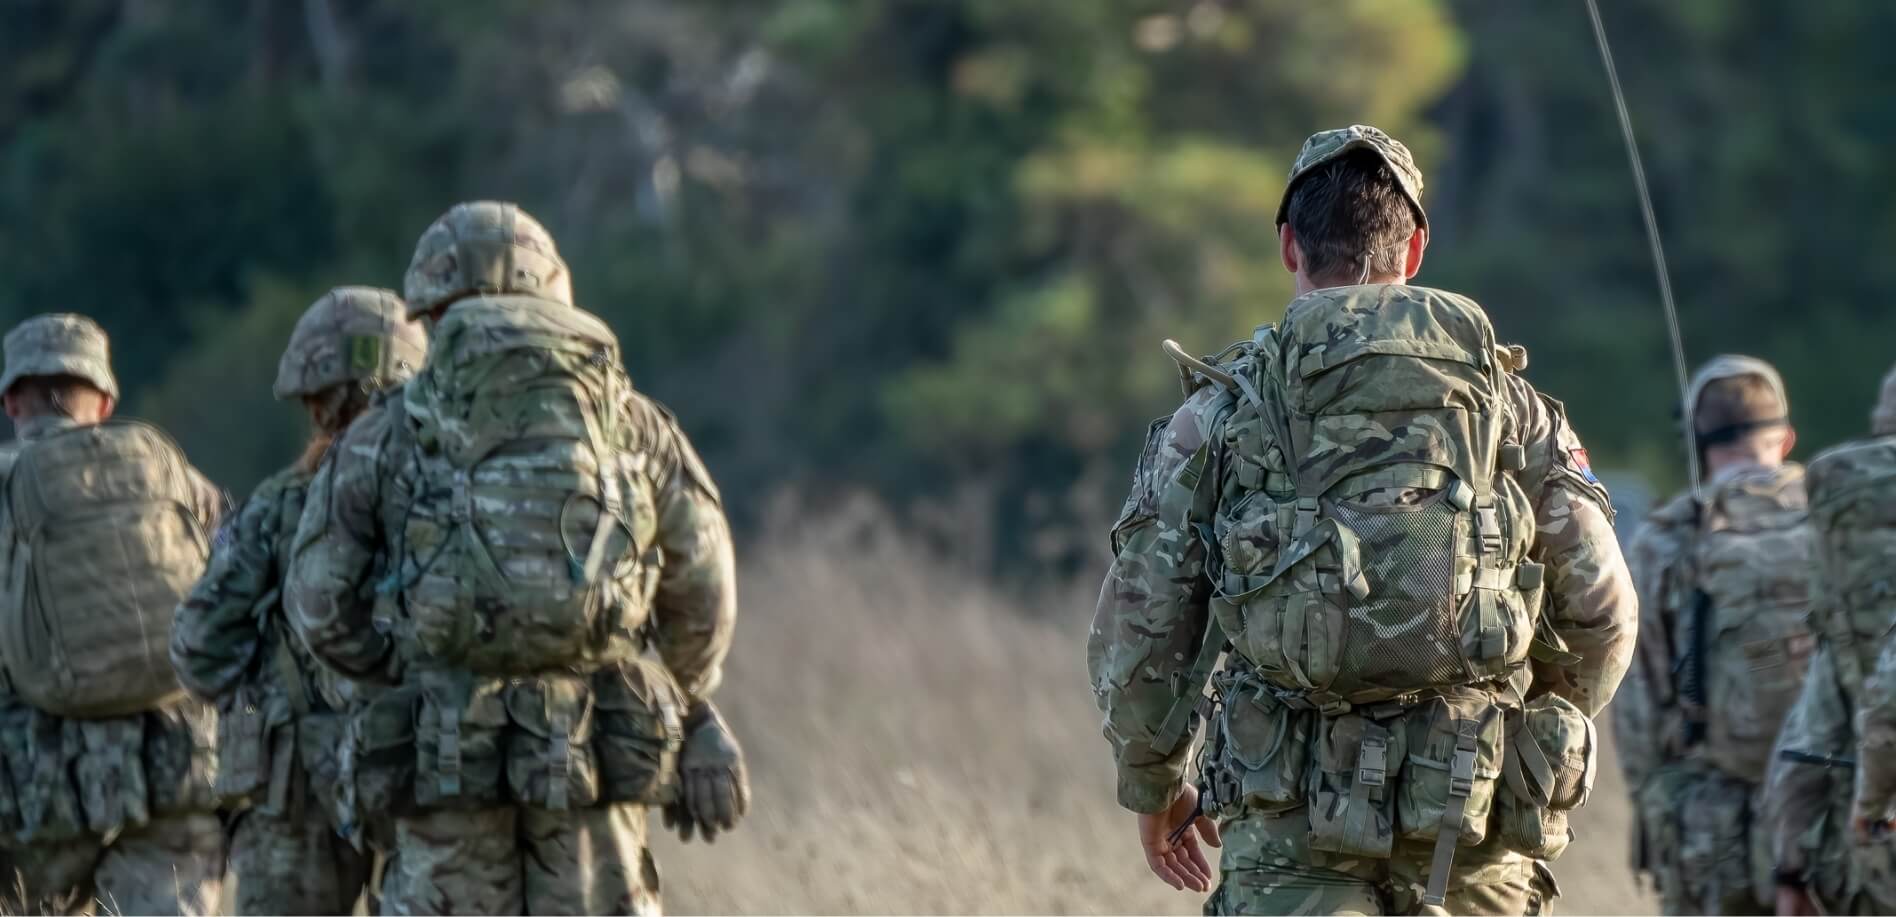 Armed forces personnel walking in field